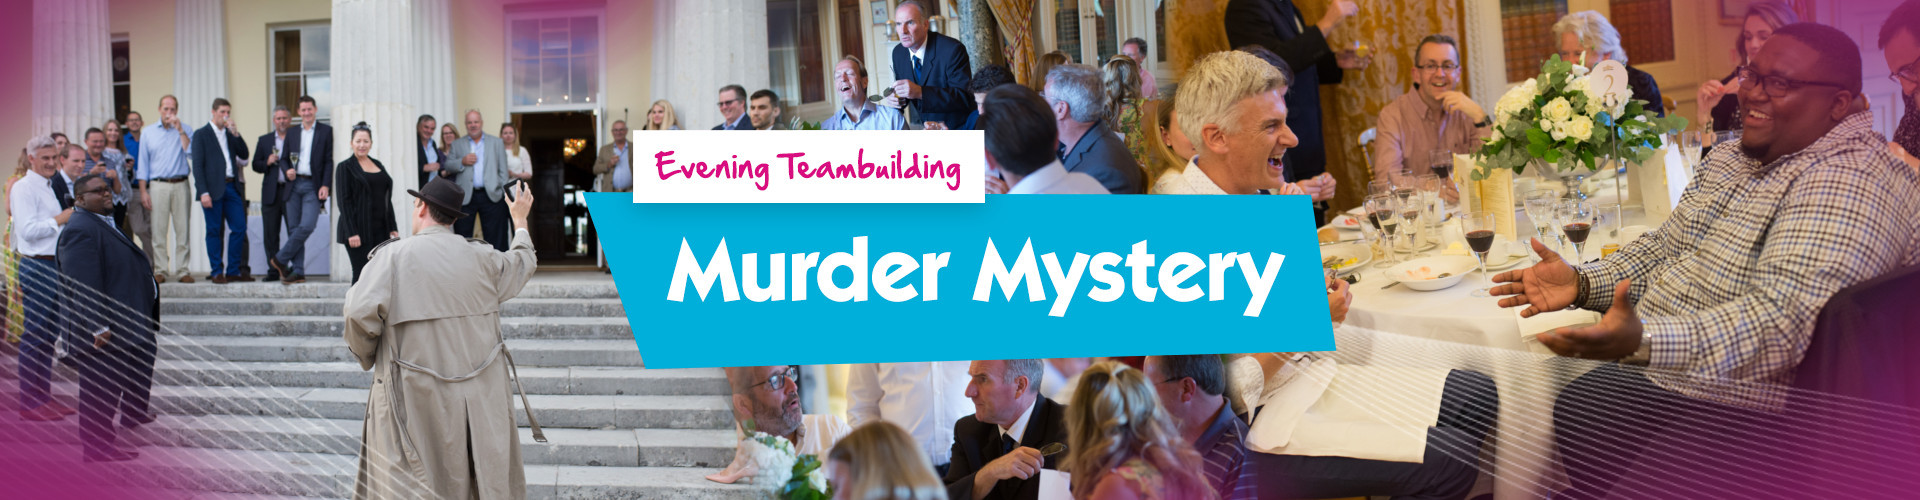 Murder Mystery Banner